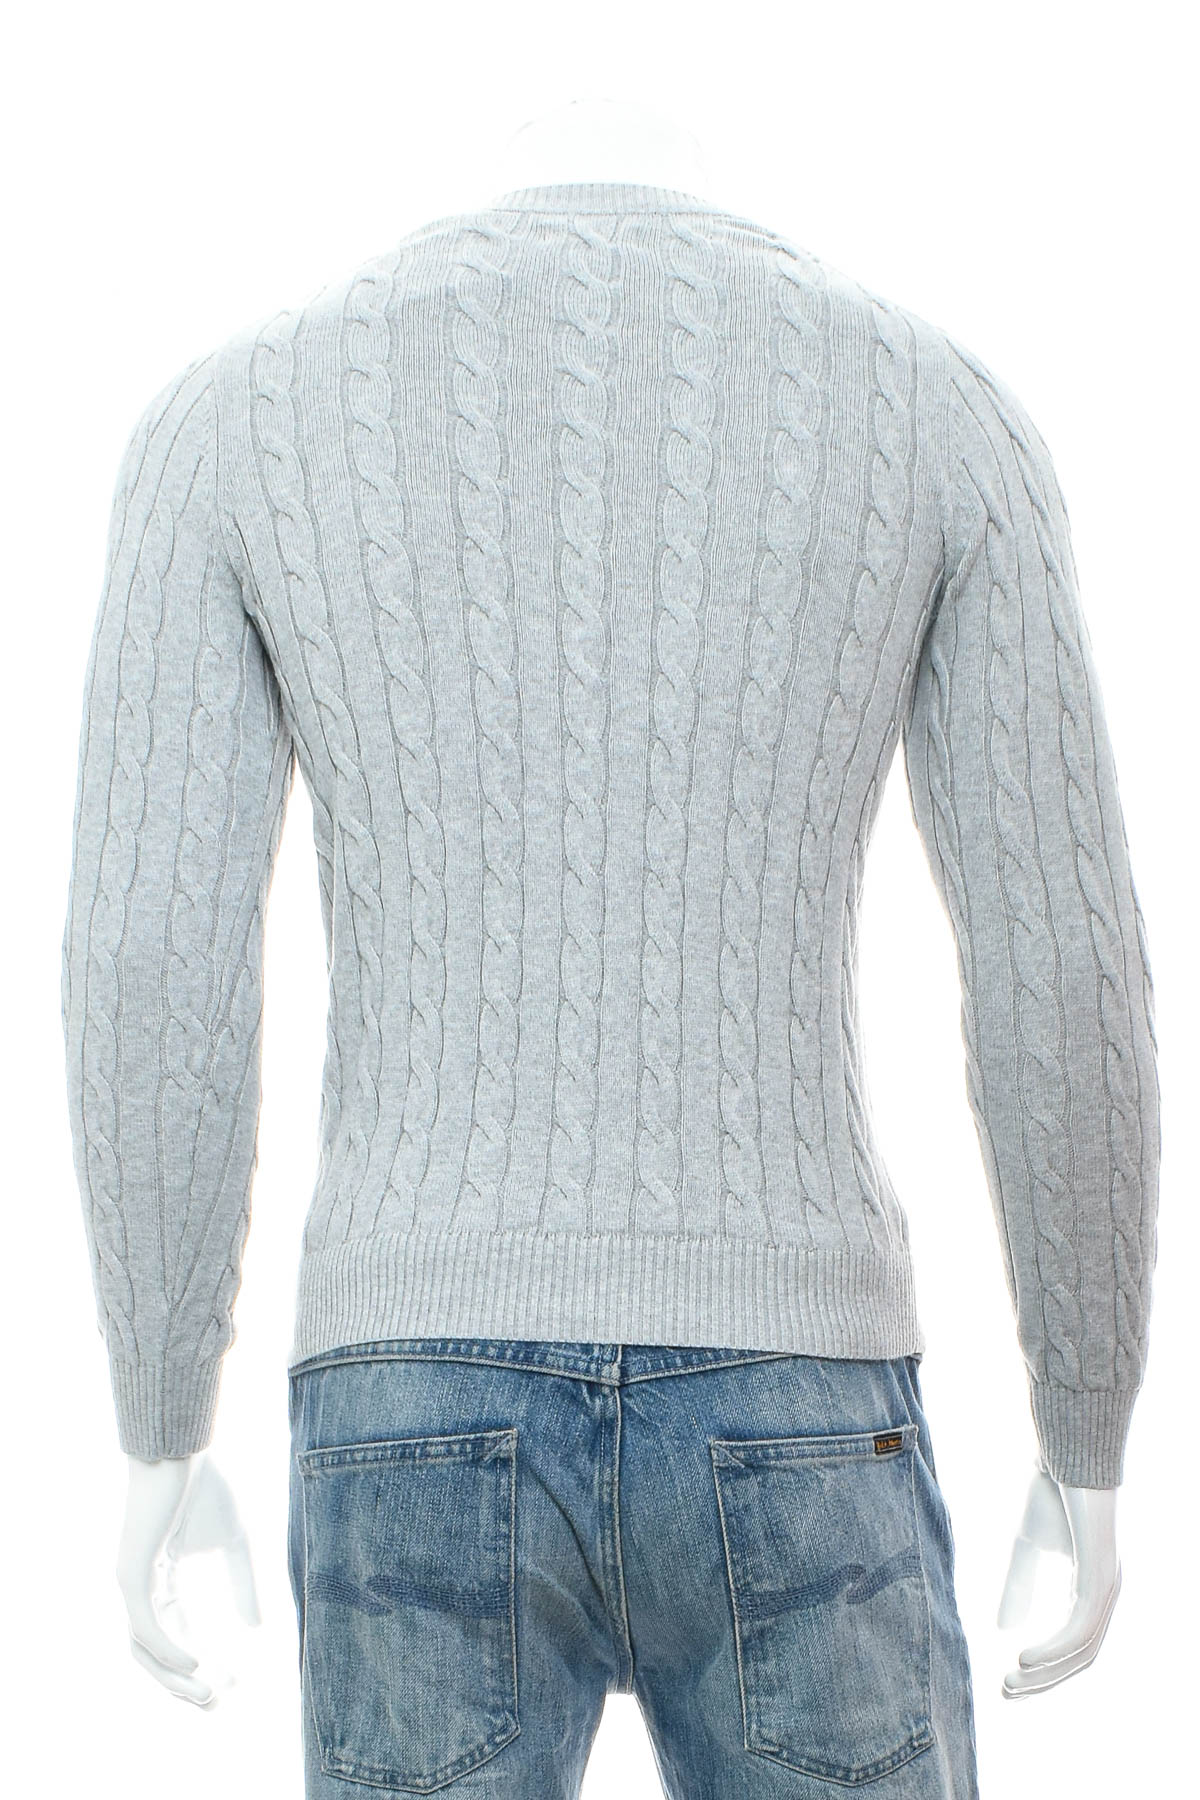 Men's sweater - Gant - 1